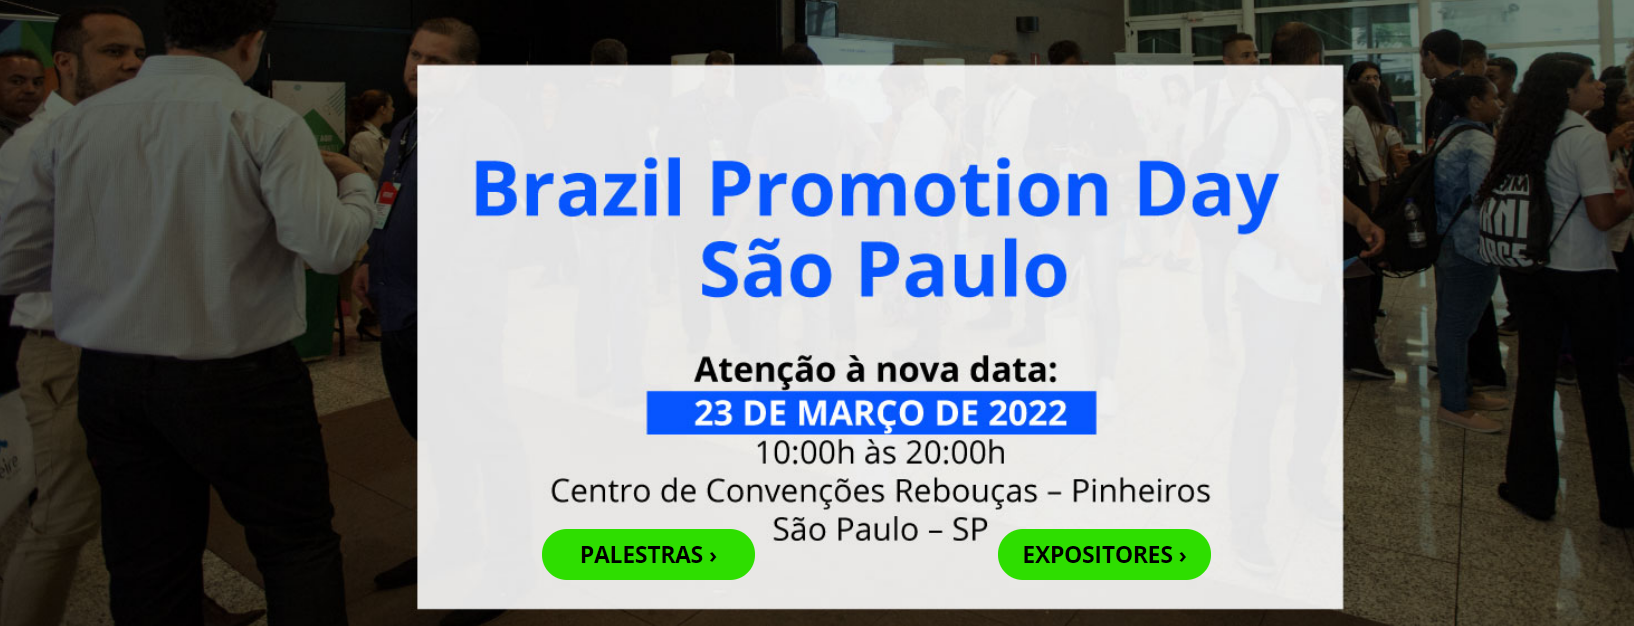 BRAZIL PROMOTION DAY Feiras & Negócios